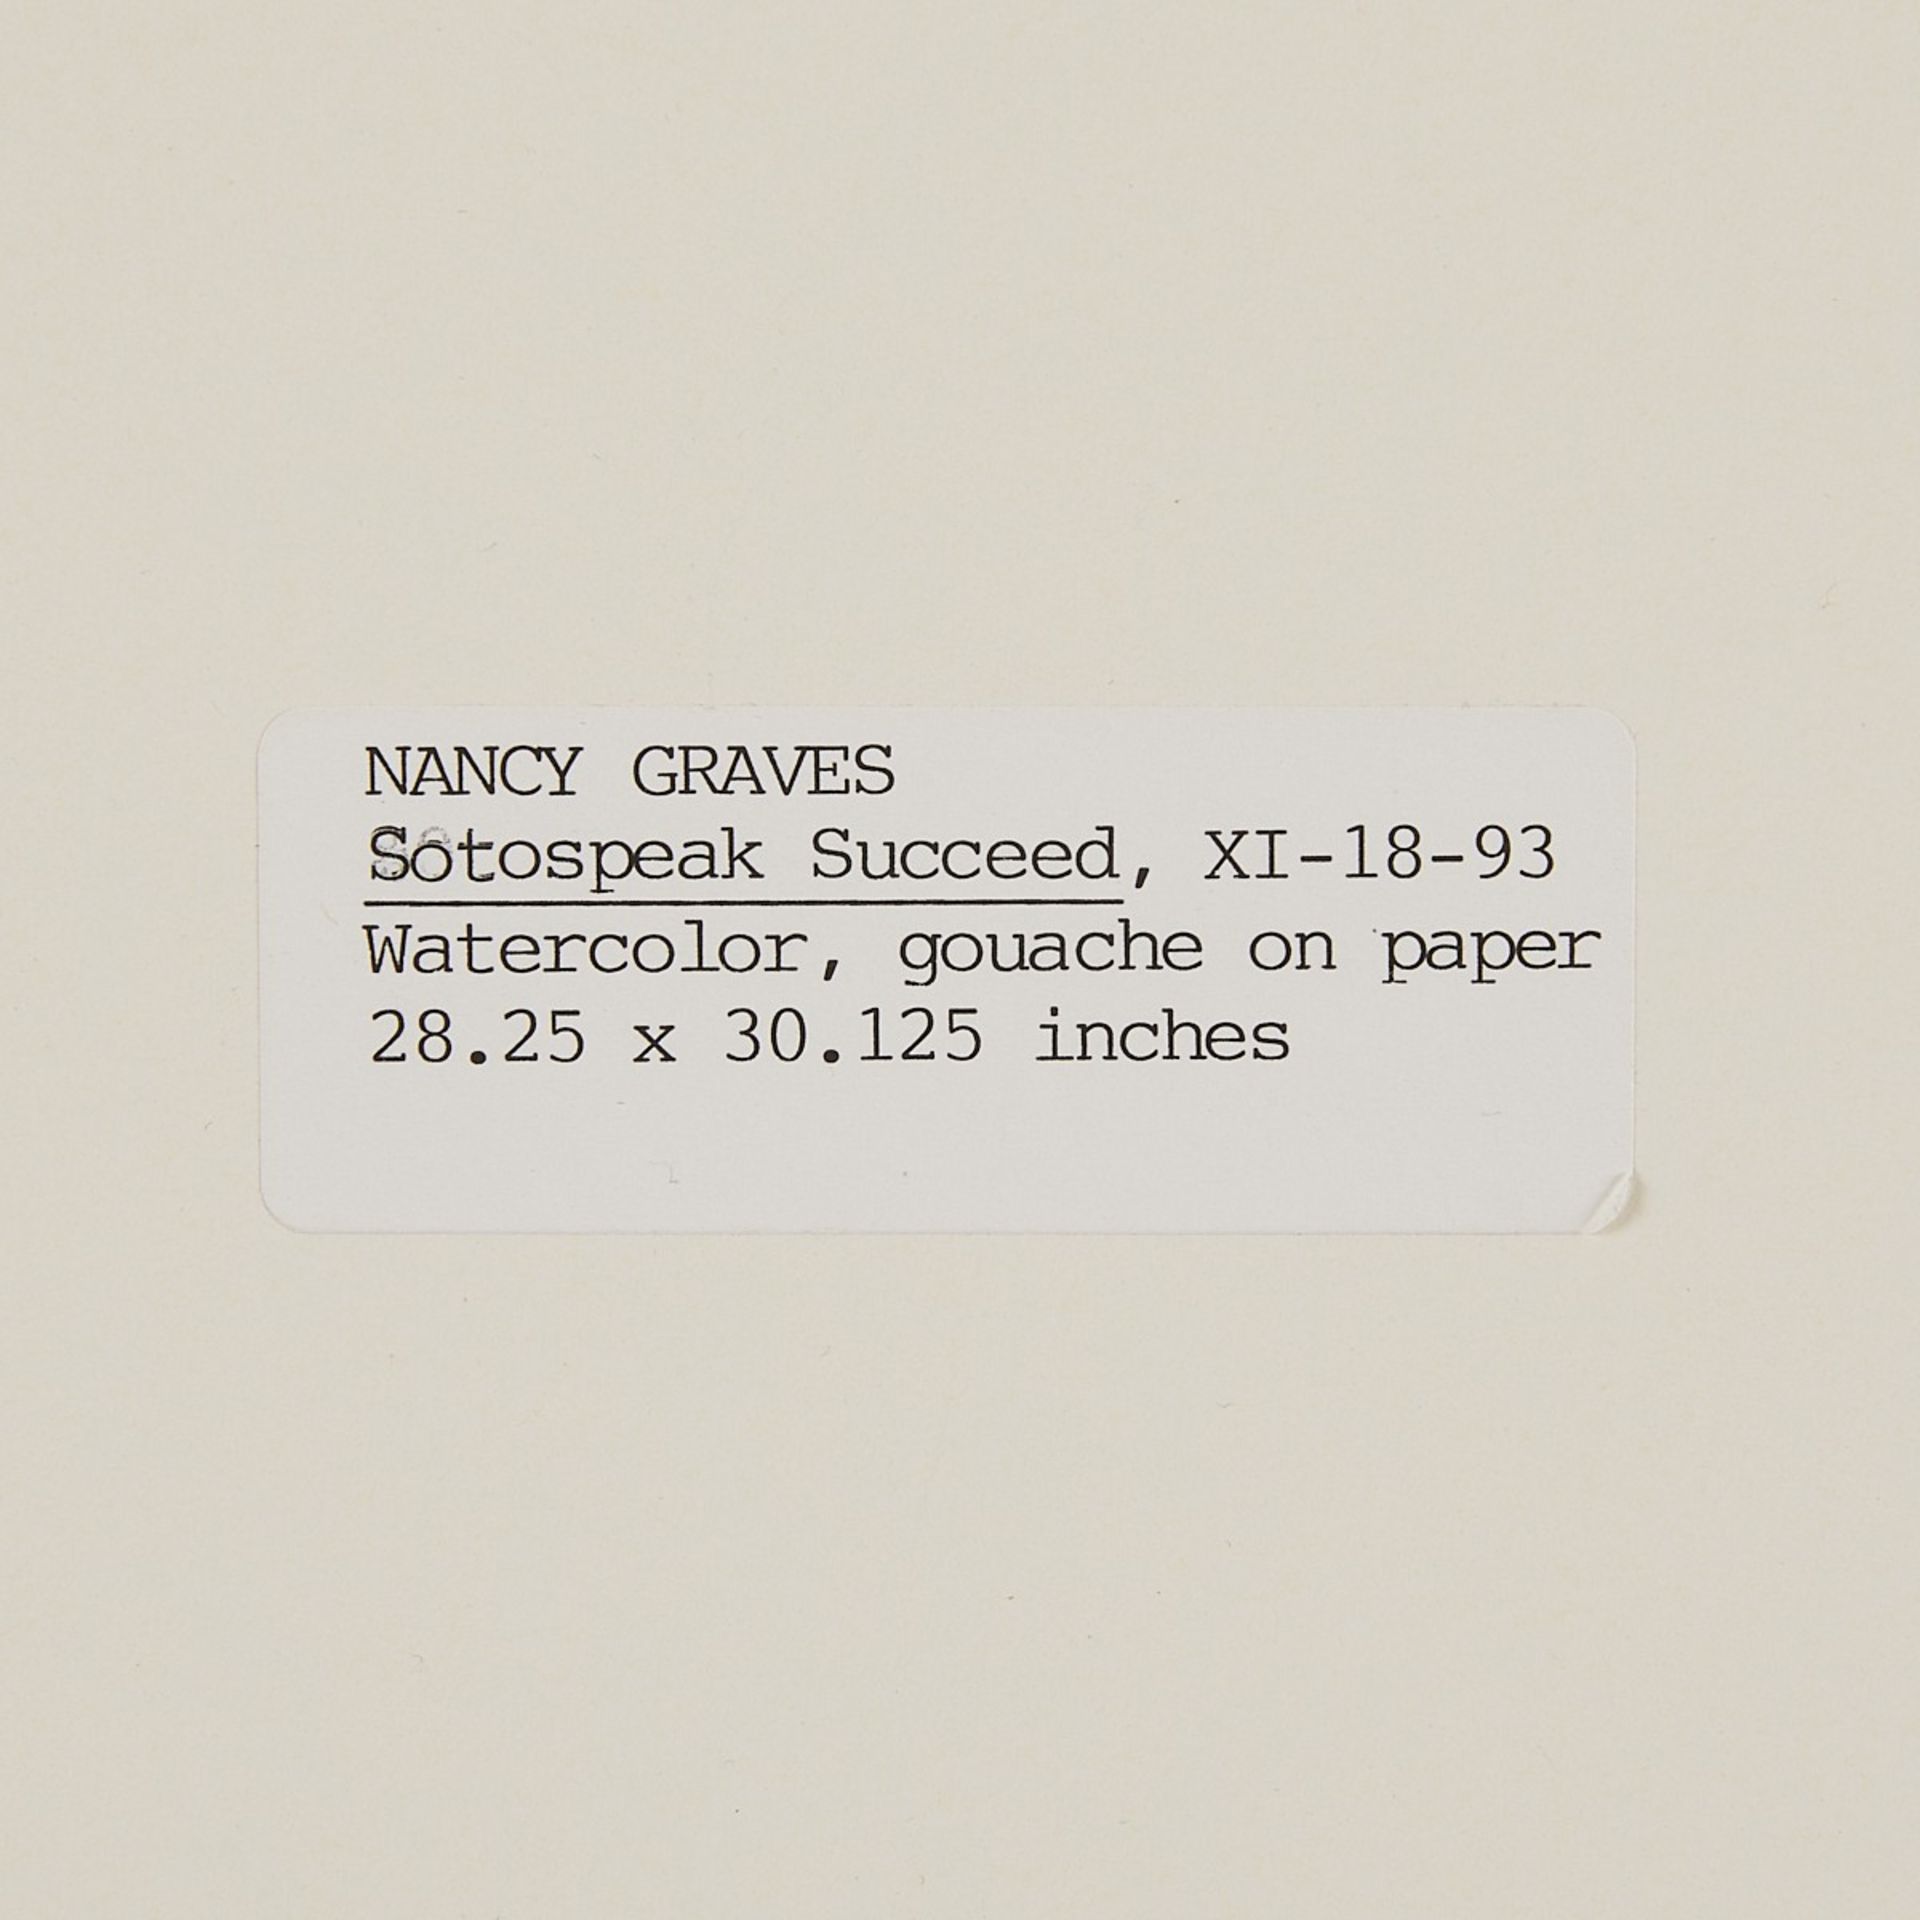 Nancy Graves "Sotospeak Succeed" Mixed Media - Image 7 of 8